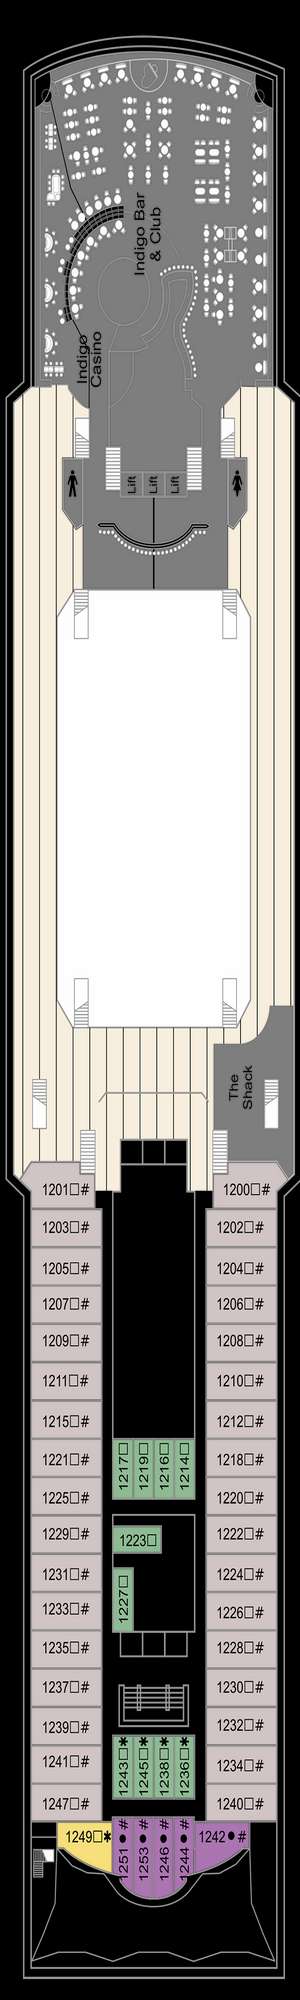 Deck plan for Marella Explorer 2